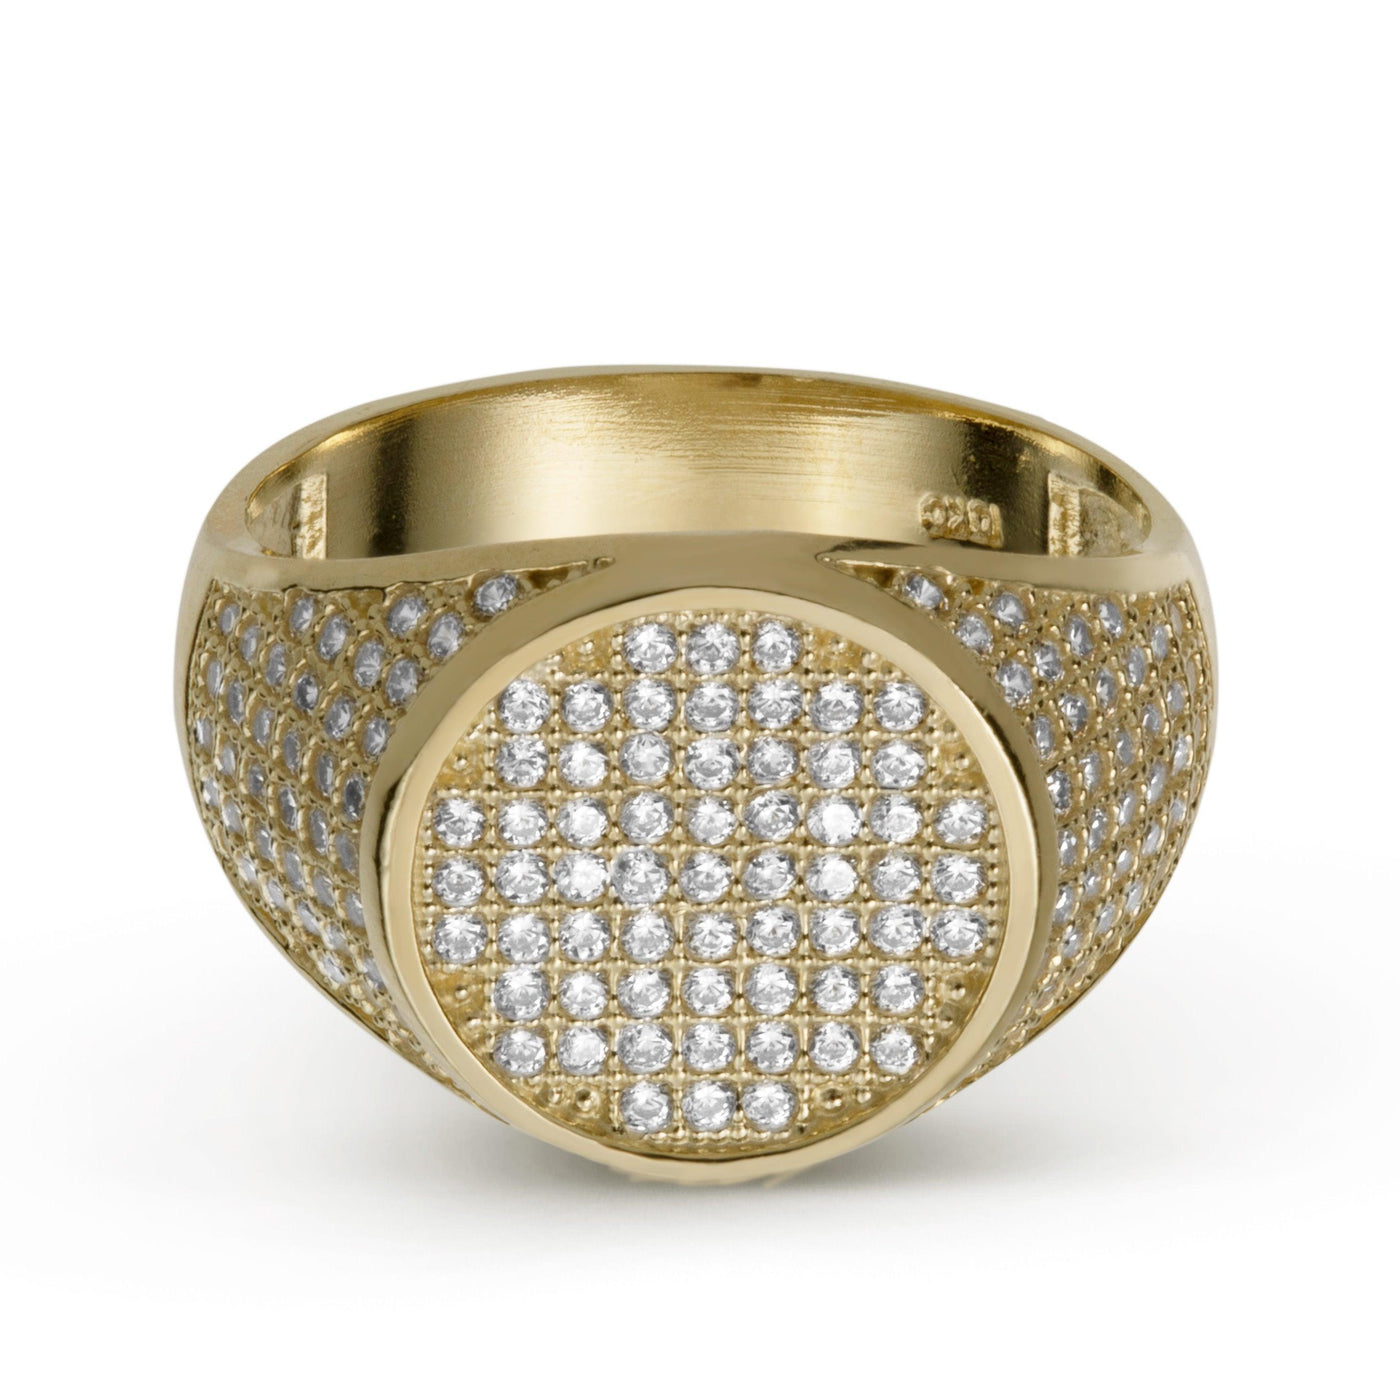 Round Design CZ Ring Solid 10K Yellow Gold - bayamjewelry